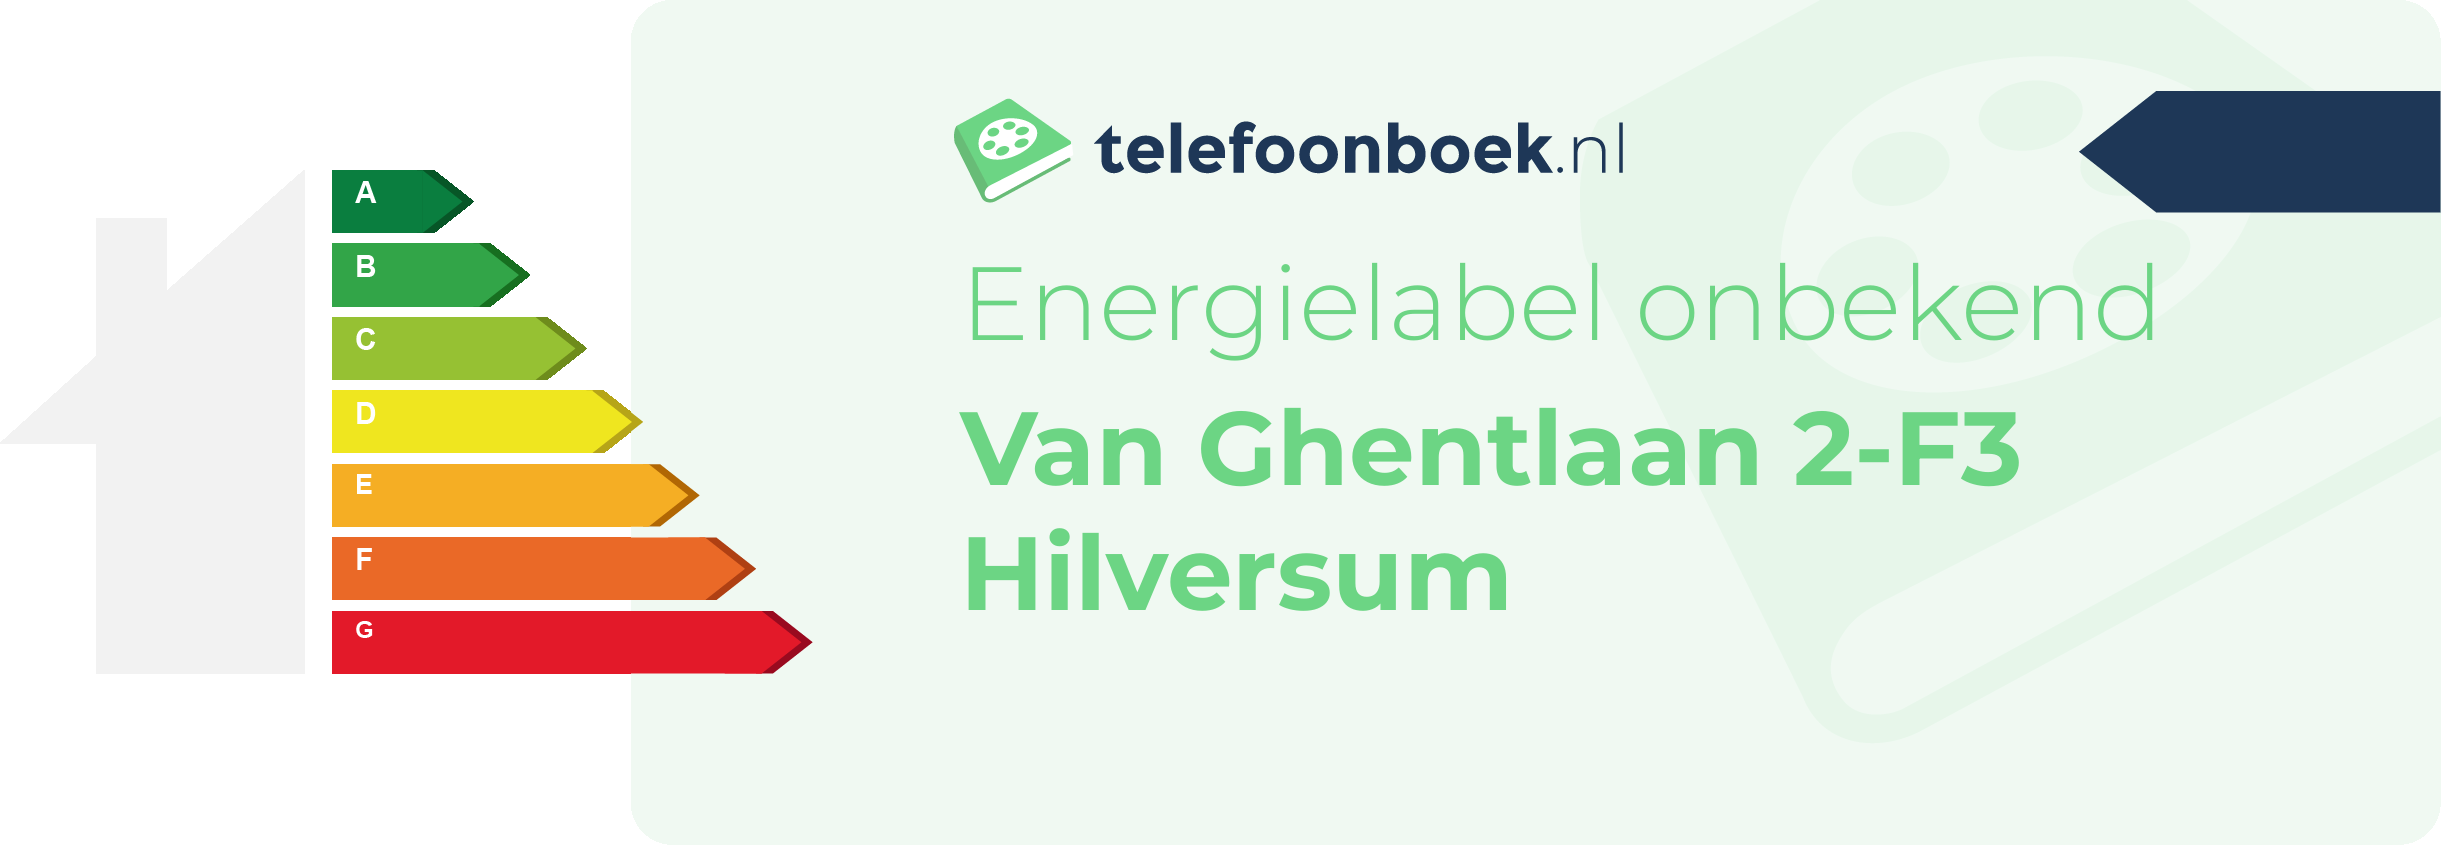 Energielabel Van Ghentlaan 2-F3 Hilversum